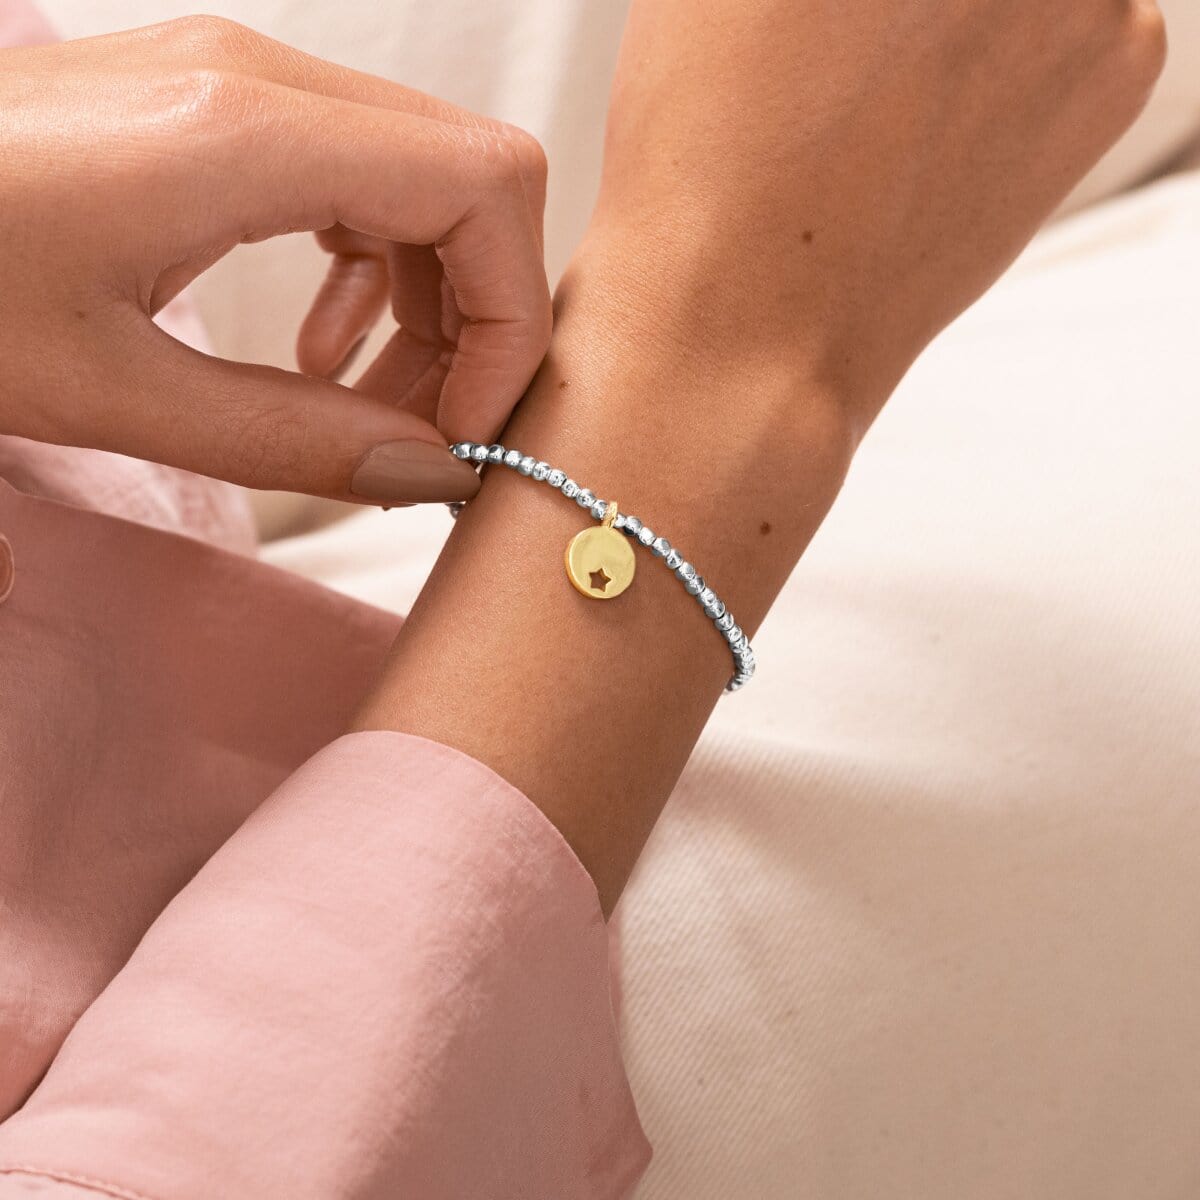 Joma Jewellery Bracelet Joma Jewellery Radiance Bracelet - A Little One in a Million